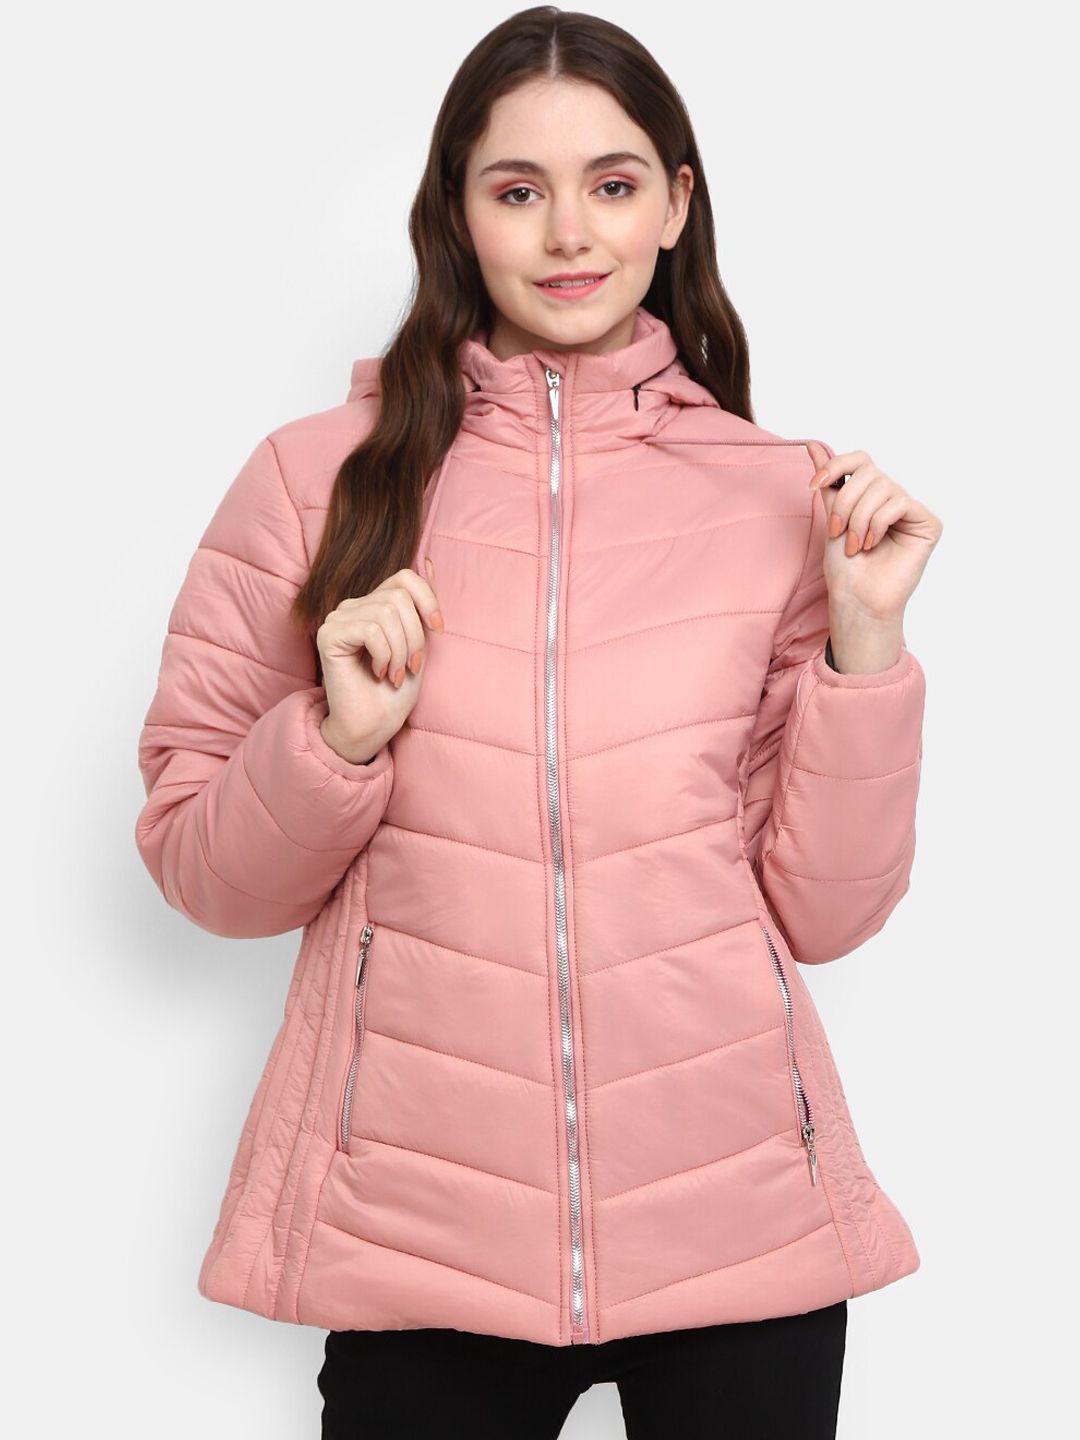 v-mart-women-plus-size-pink-hooded-puffer-jacket